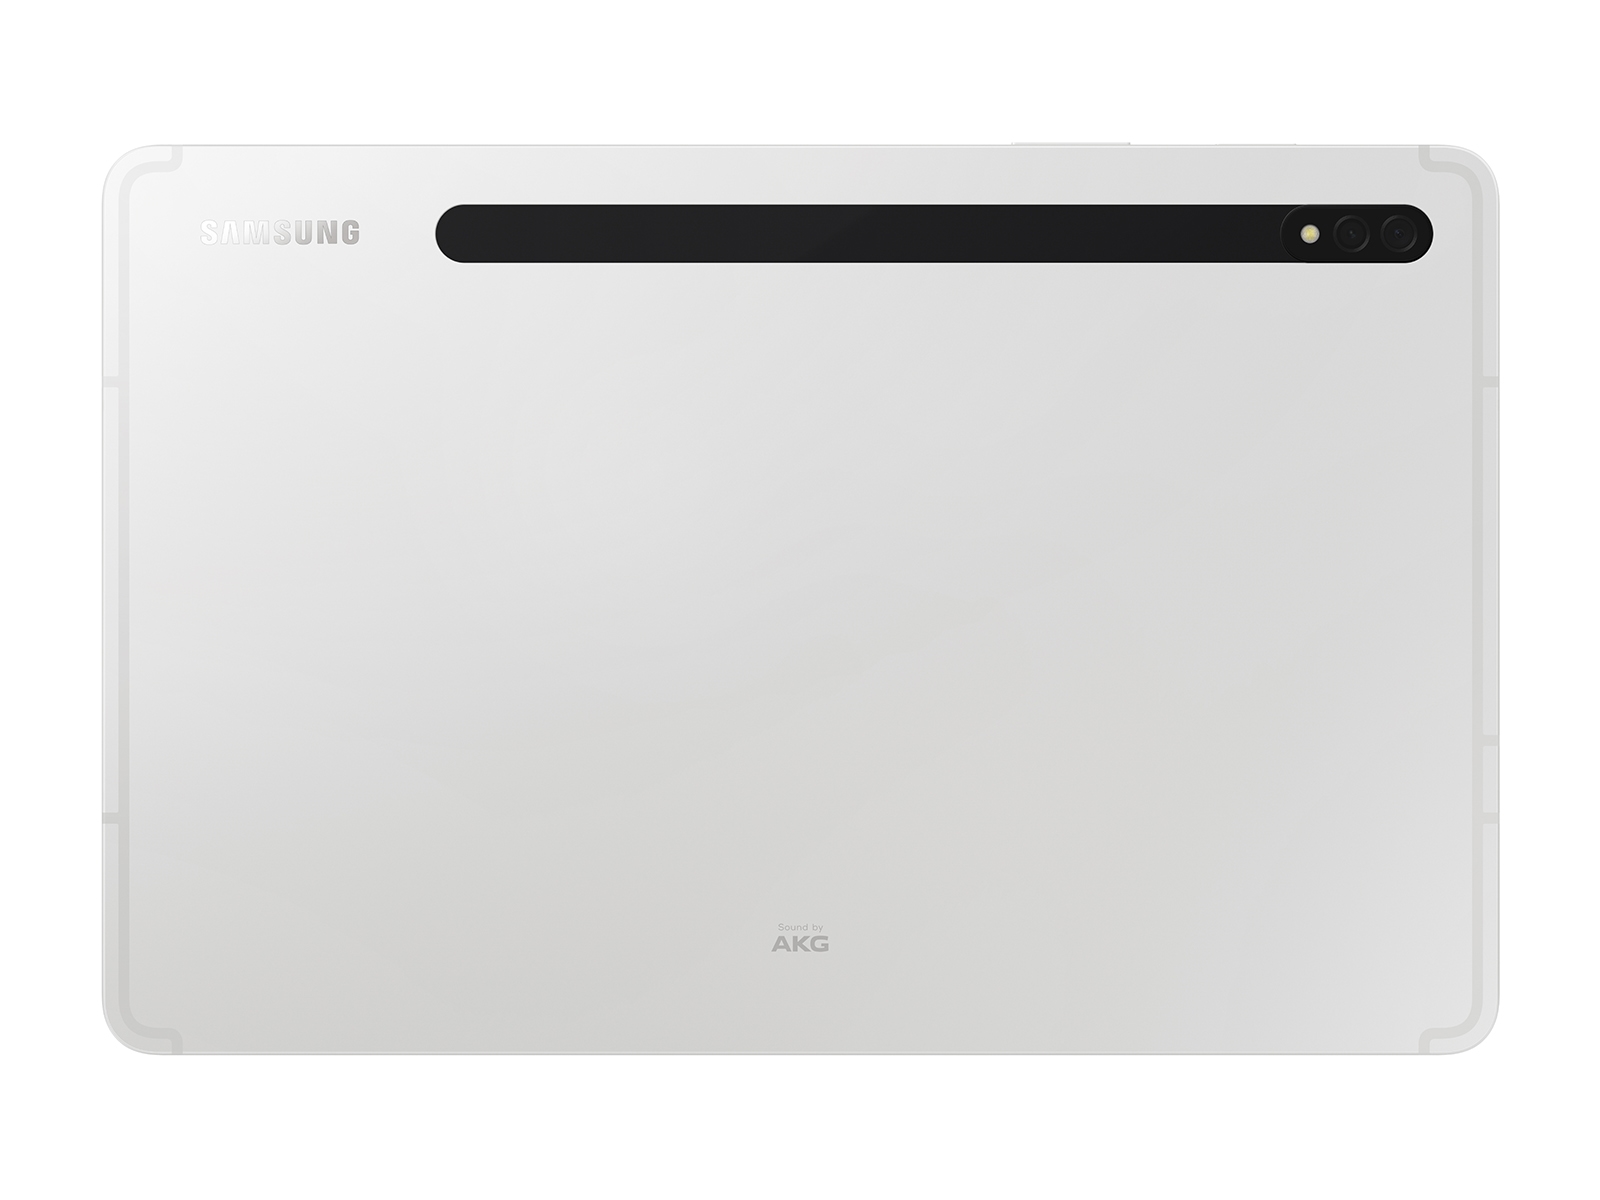 Thumbnail image of Galaxy Tab S8, 128GB, Silver (Wi-Fi)